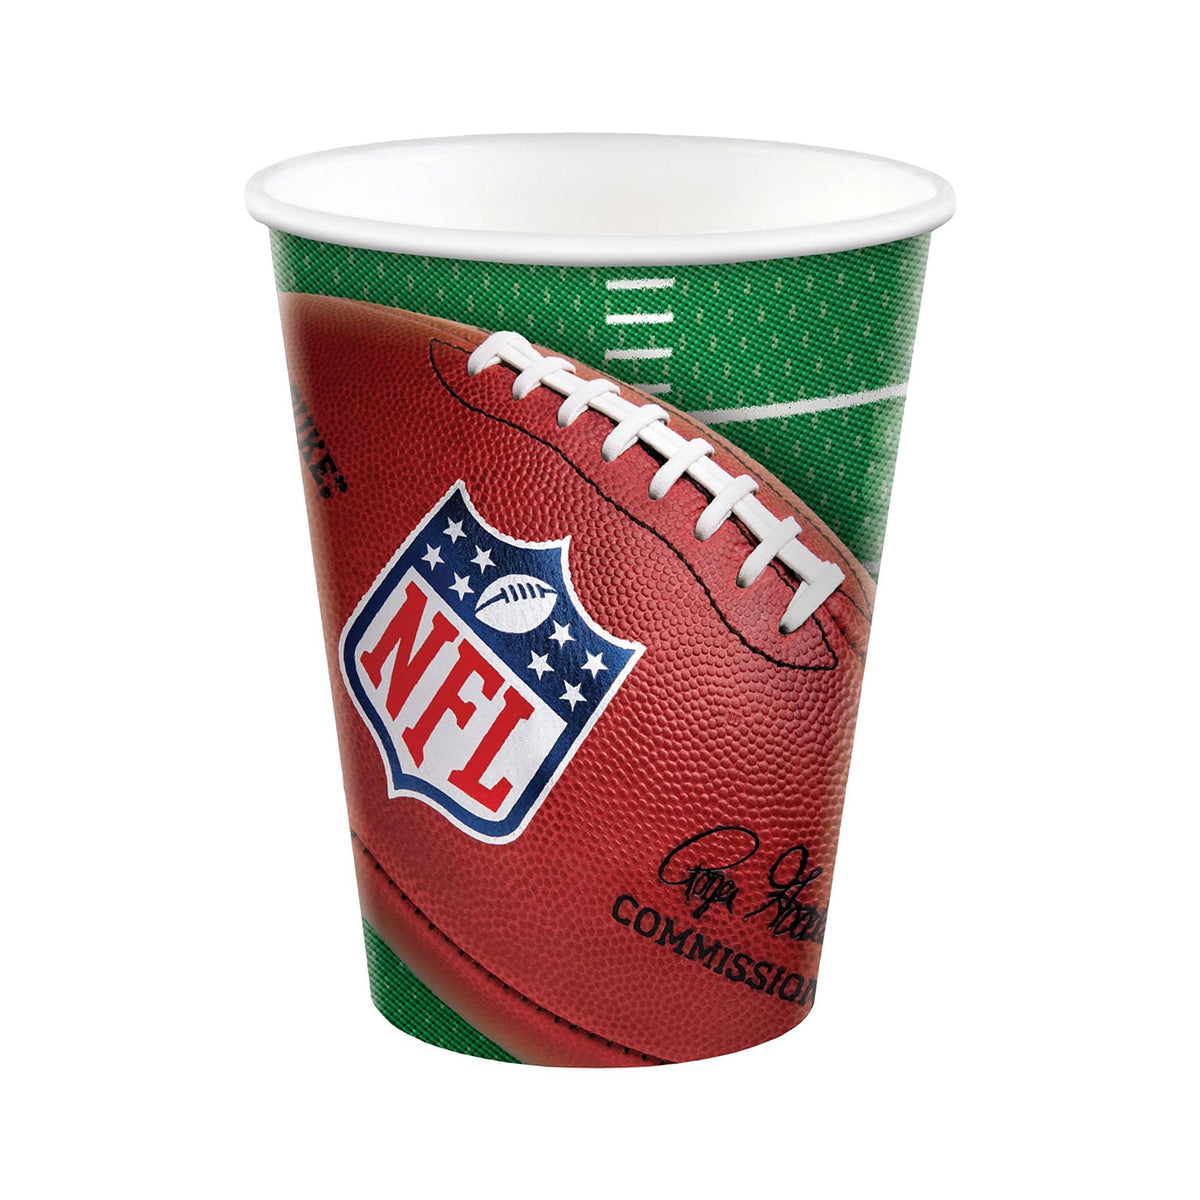 AMSCAN CA Superbowl NFL Super Bowl Party Paper Cups, 12 Oz, 12 Count